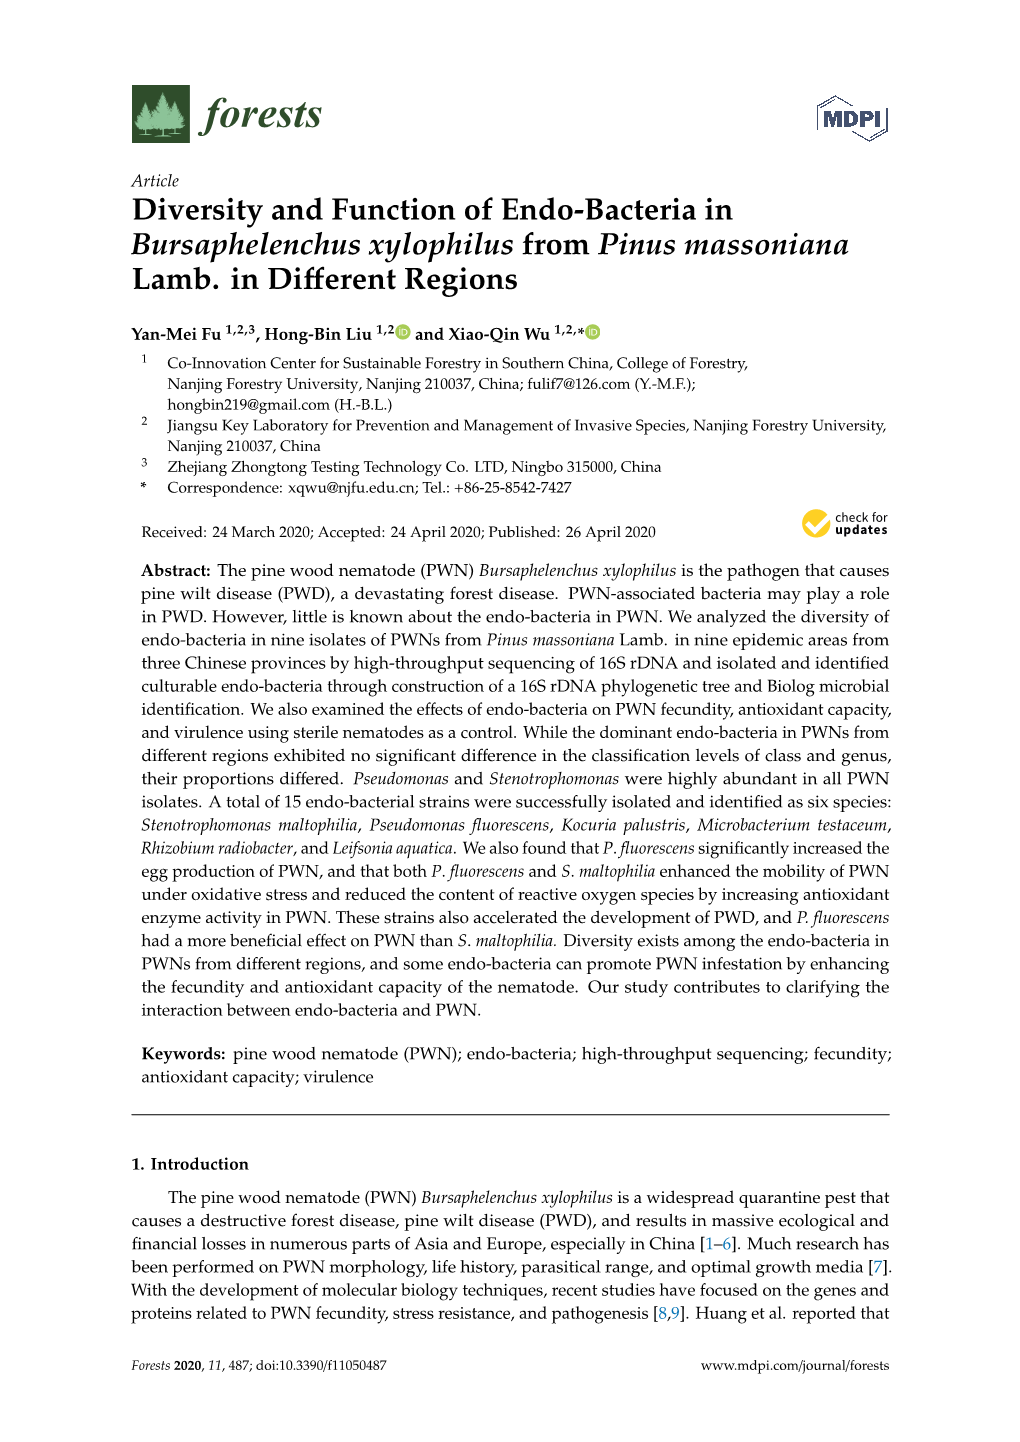 Diversity and Function of Endo-Bacteria in Bursaphelenchus Xylophilus from Pinus Massoniana Lamb